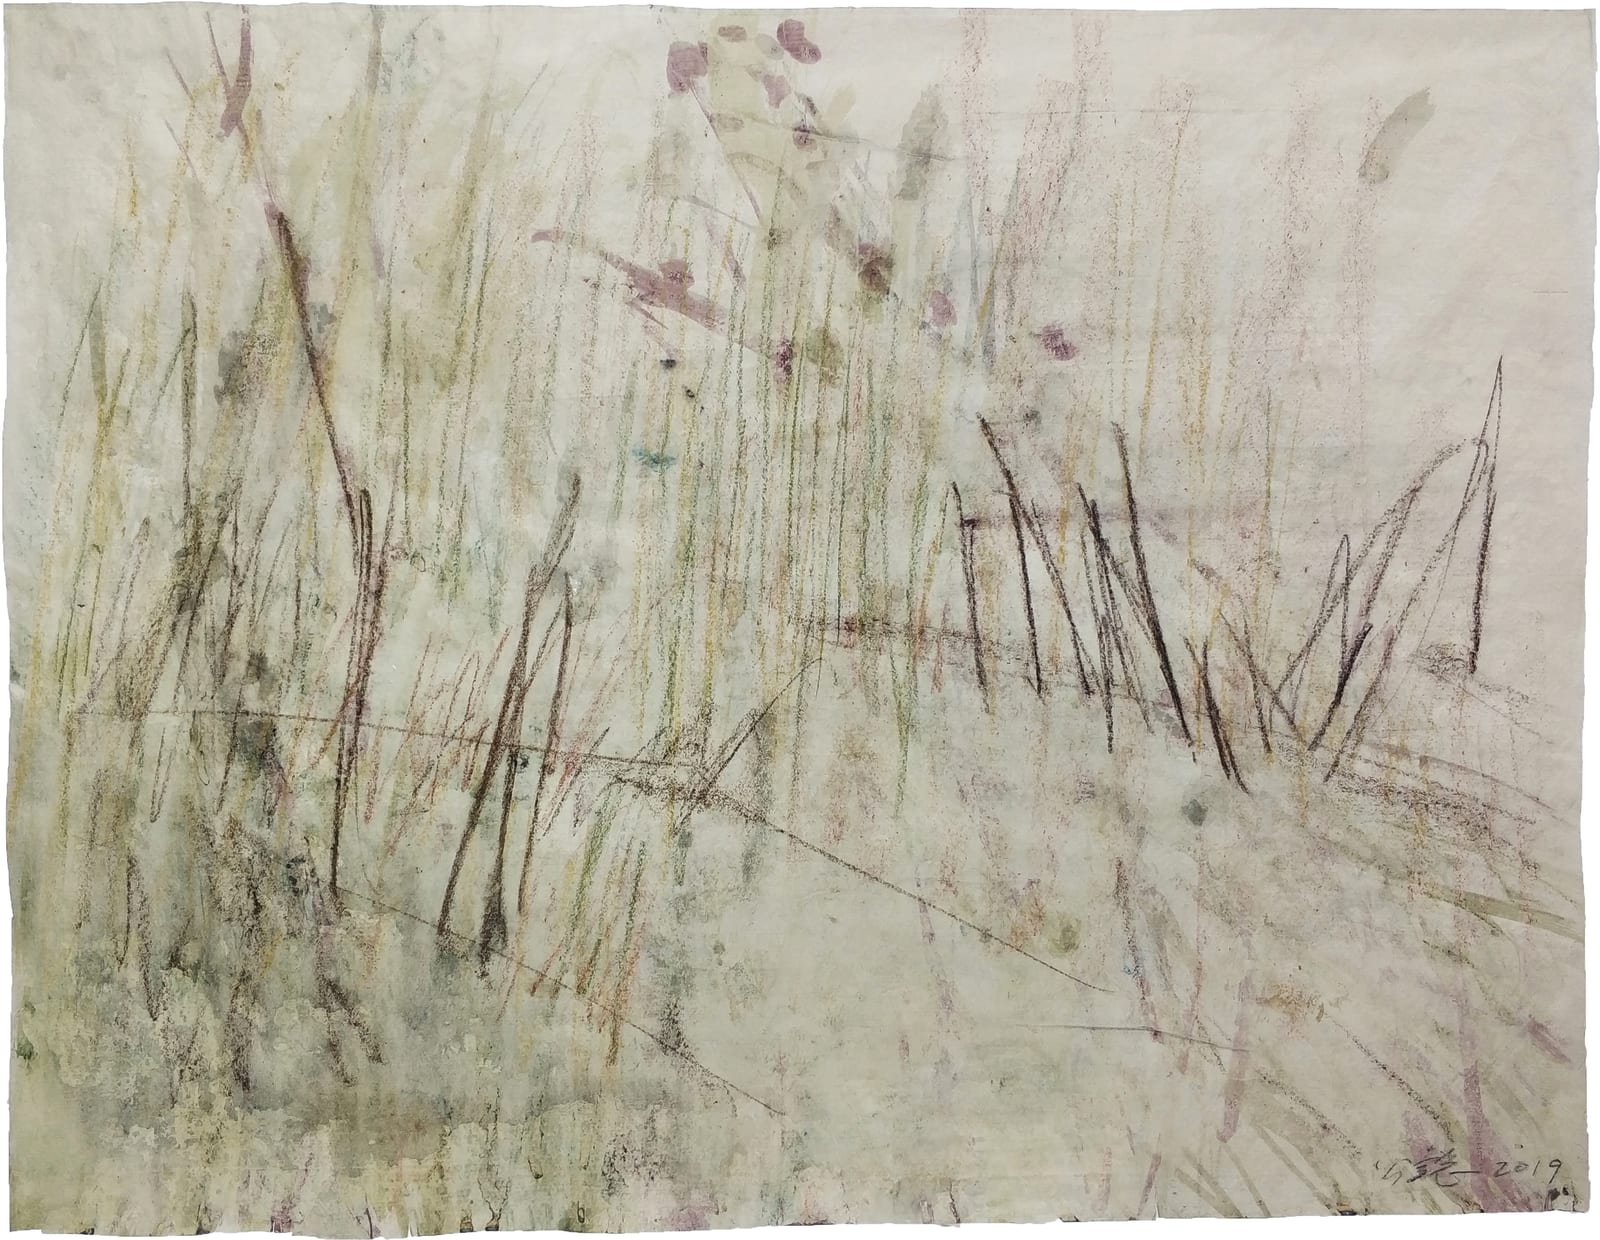 Wang Gongyi 王公懿, Leaves of Grass No. 11 草葉集之十一, 2019